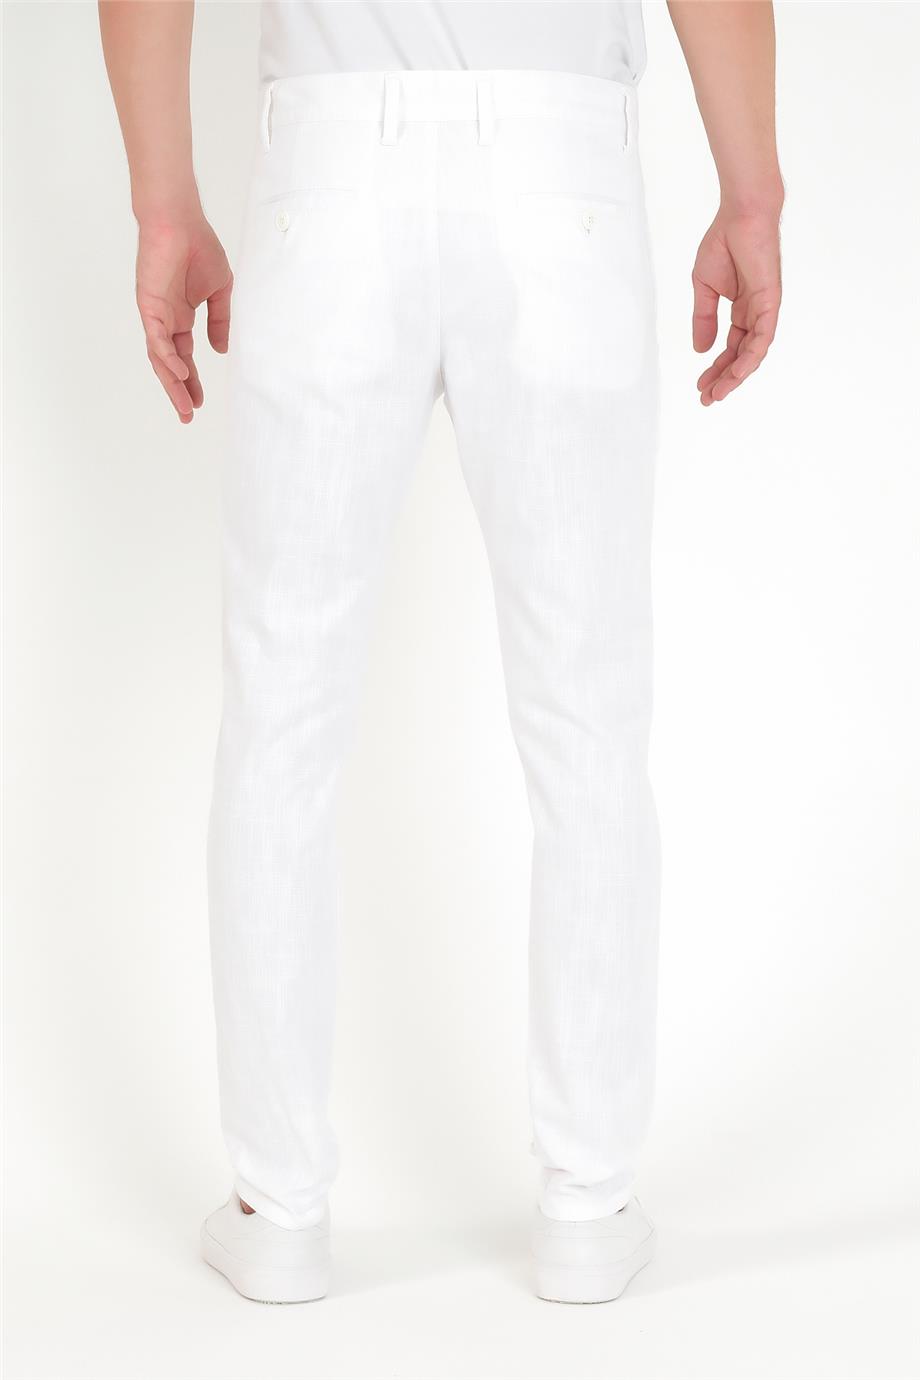 Oscar J07 00 Erkek Keten Pantolon Rodrigo - Beyaz - Normal bel standart  kalıp keten pantolon